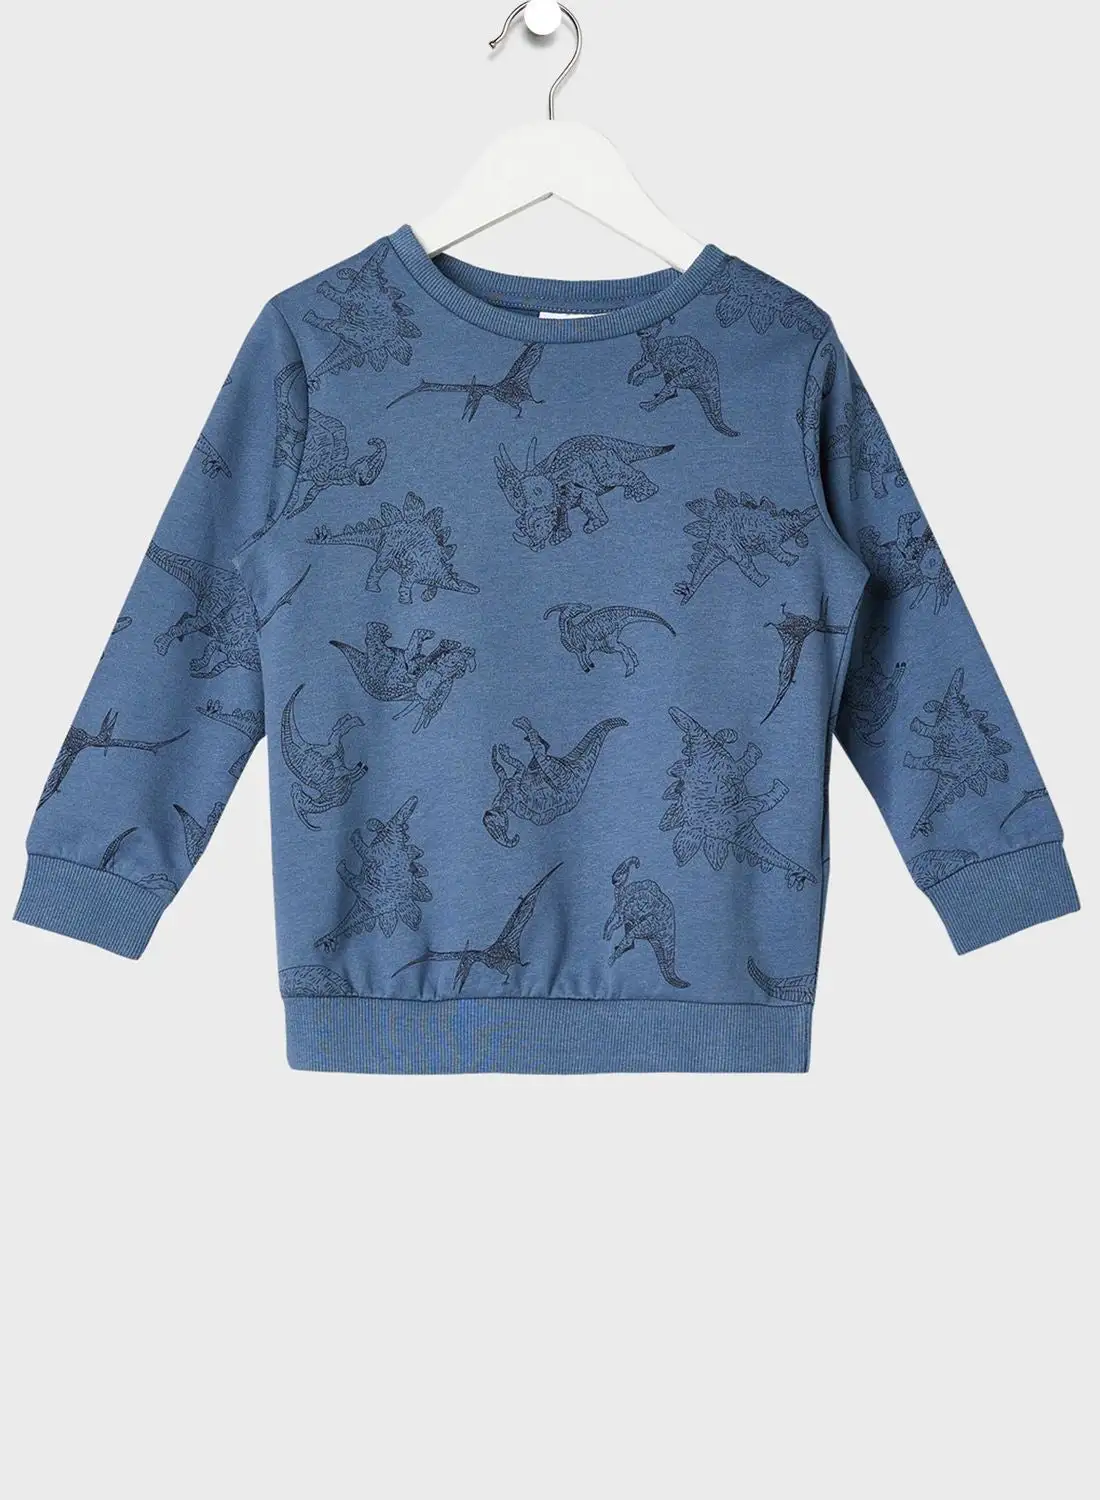 NAME IT Infant Dinosaur Graphic Sweatshirt